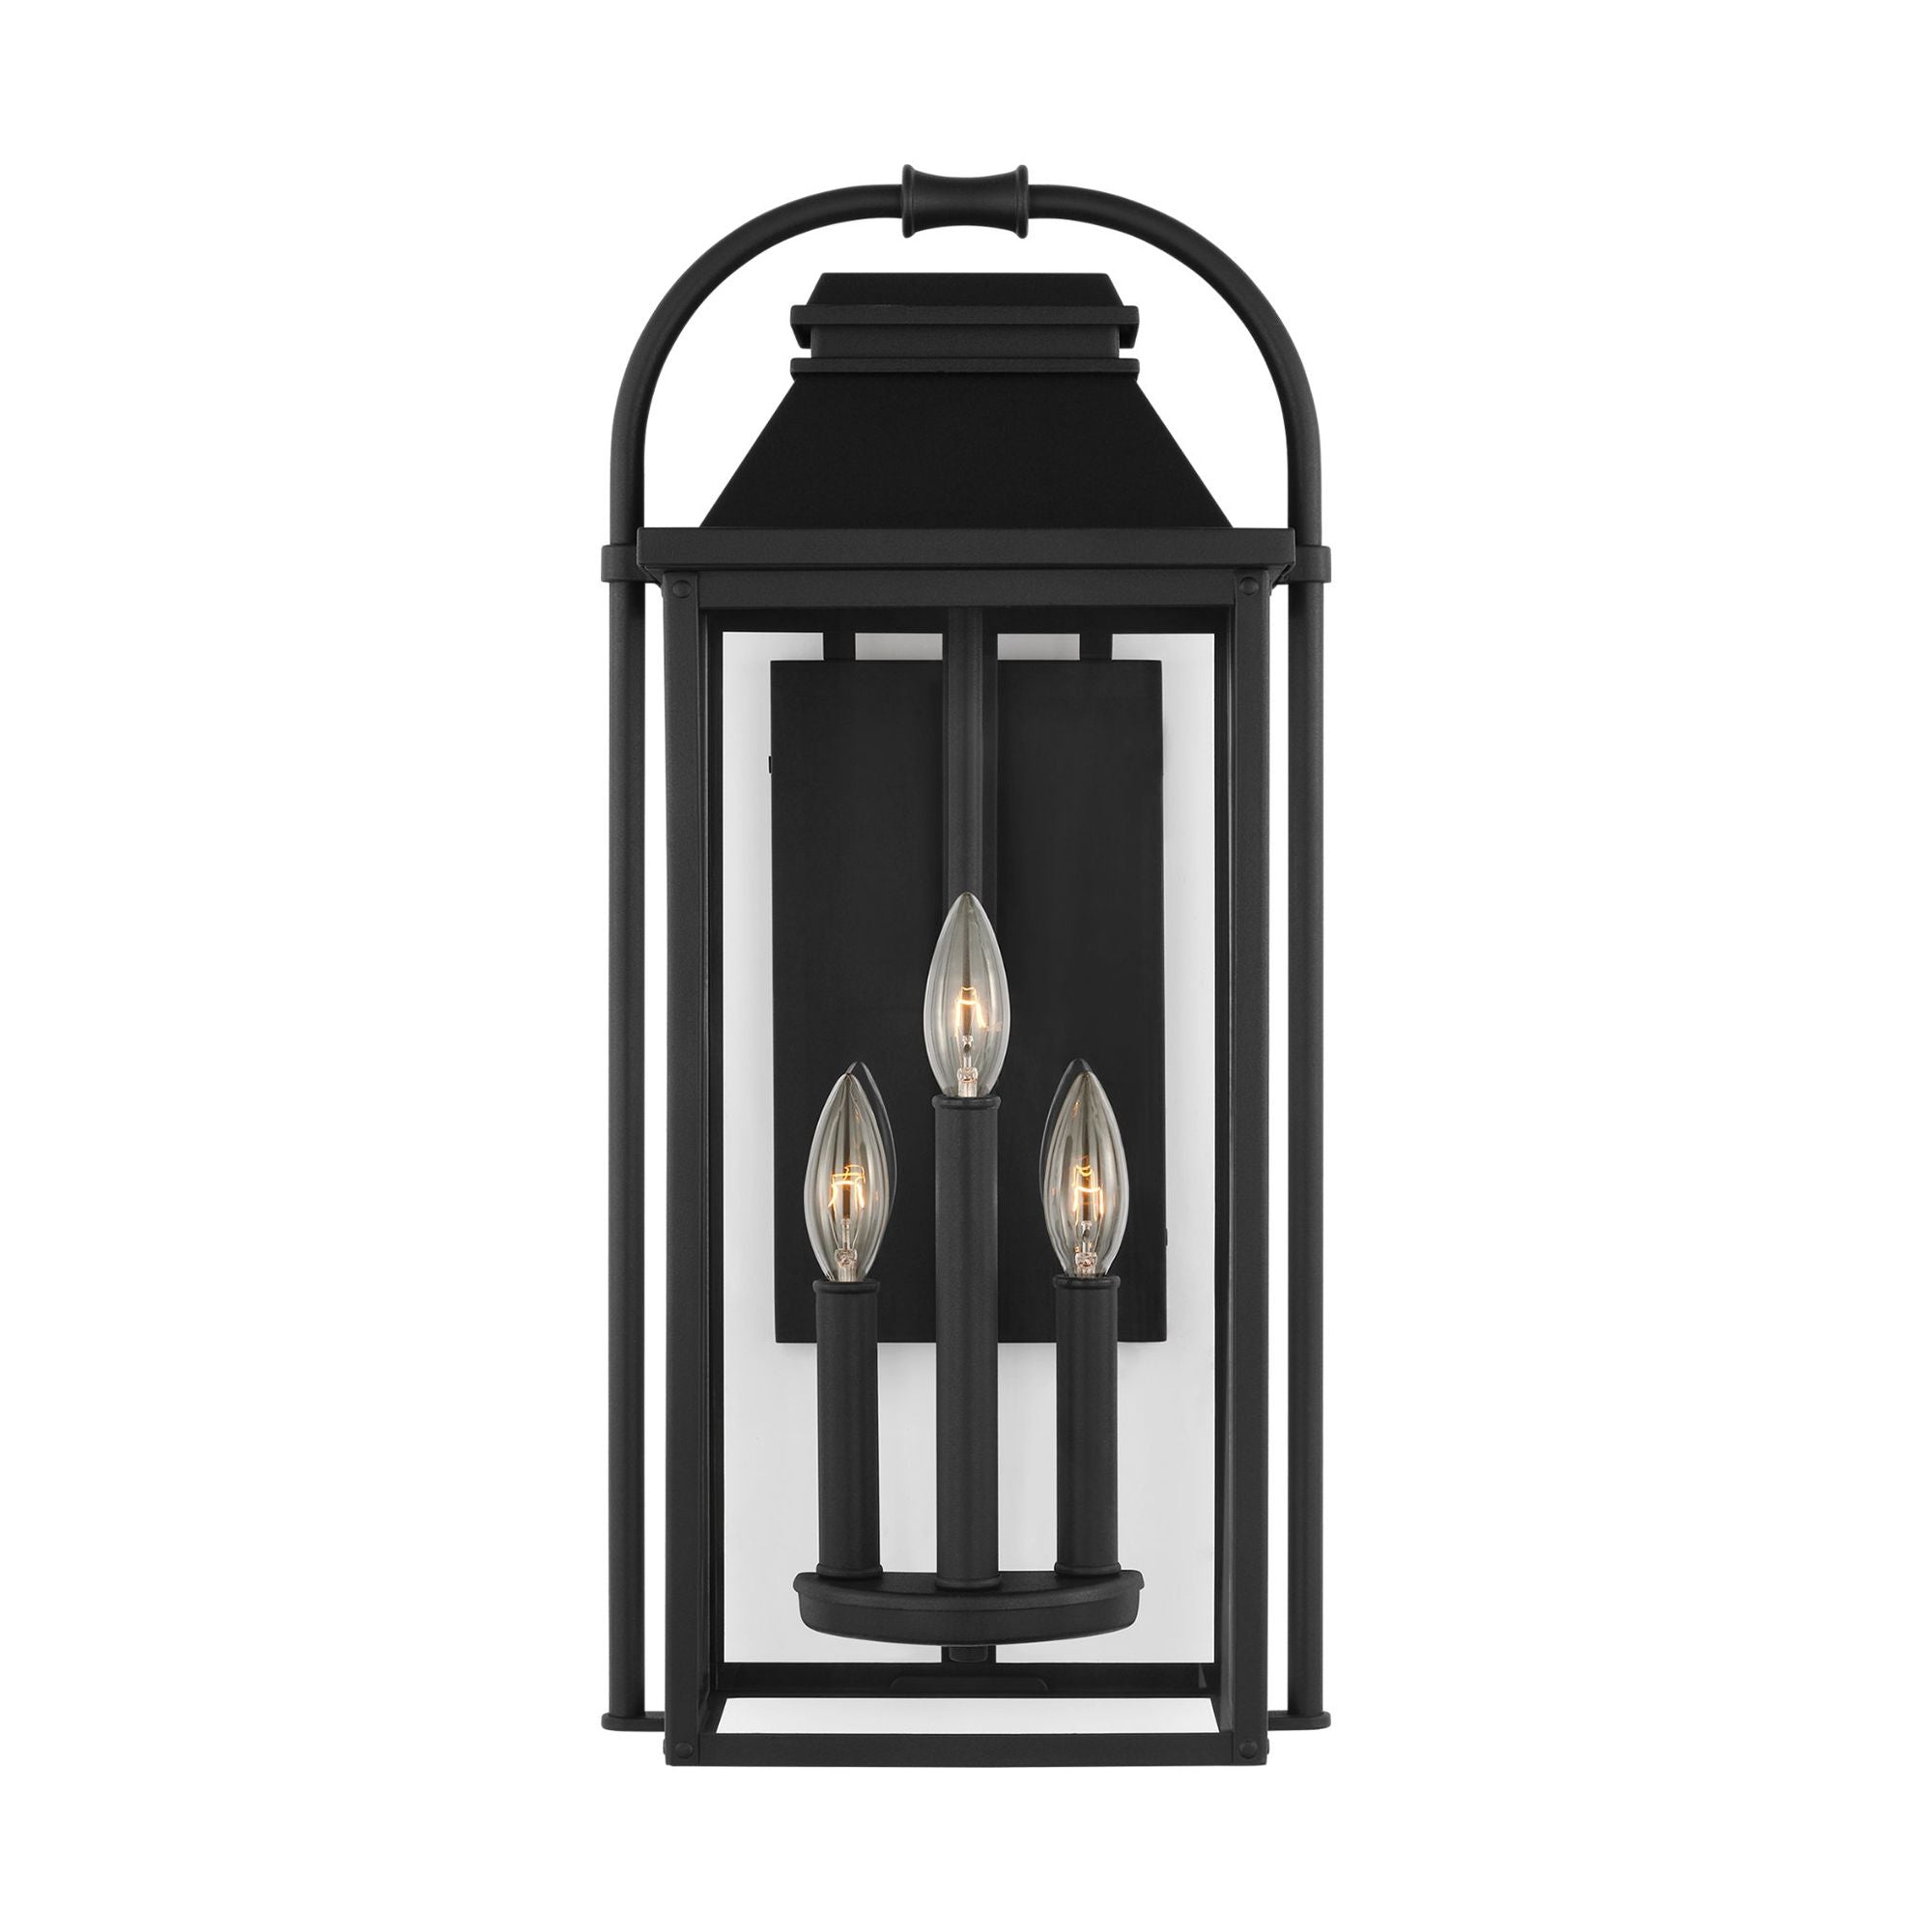 Sean Lavin Wellsworth Medium Lantern in Textured Black